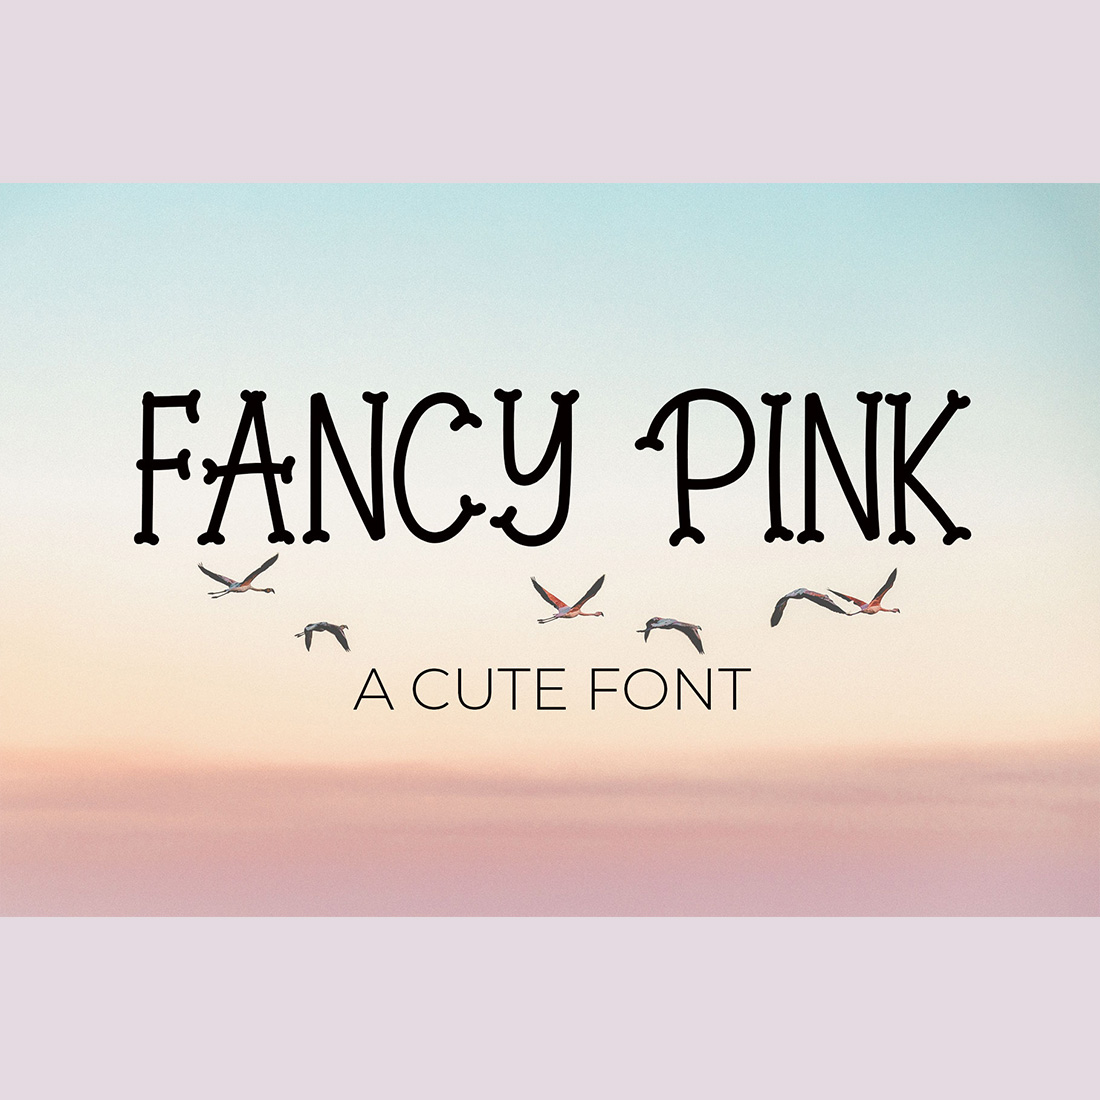 Fancy Pink Font Script cover image.